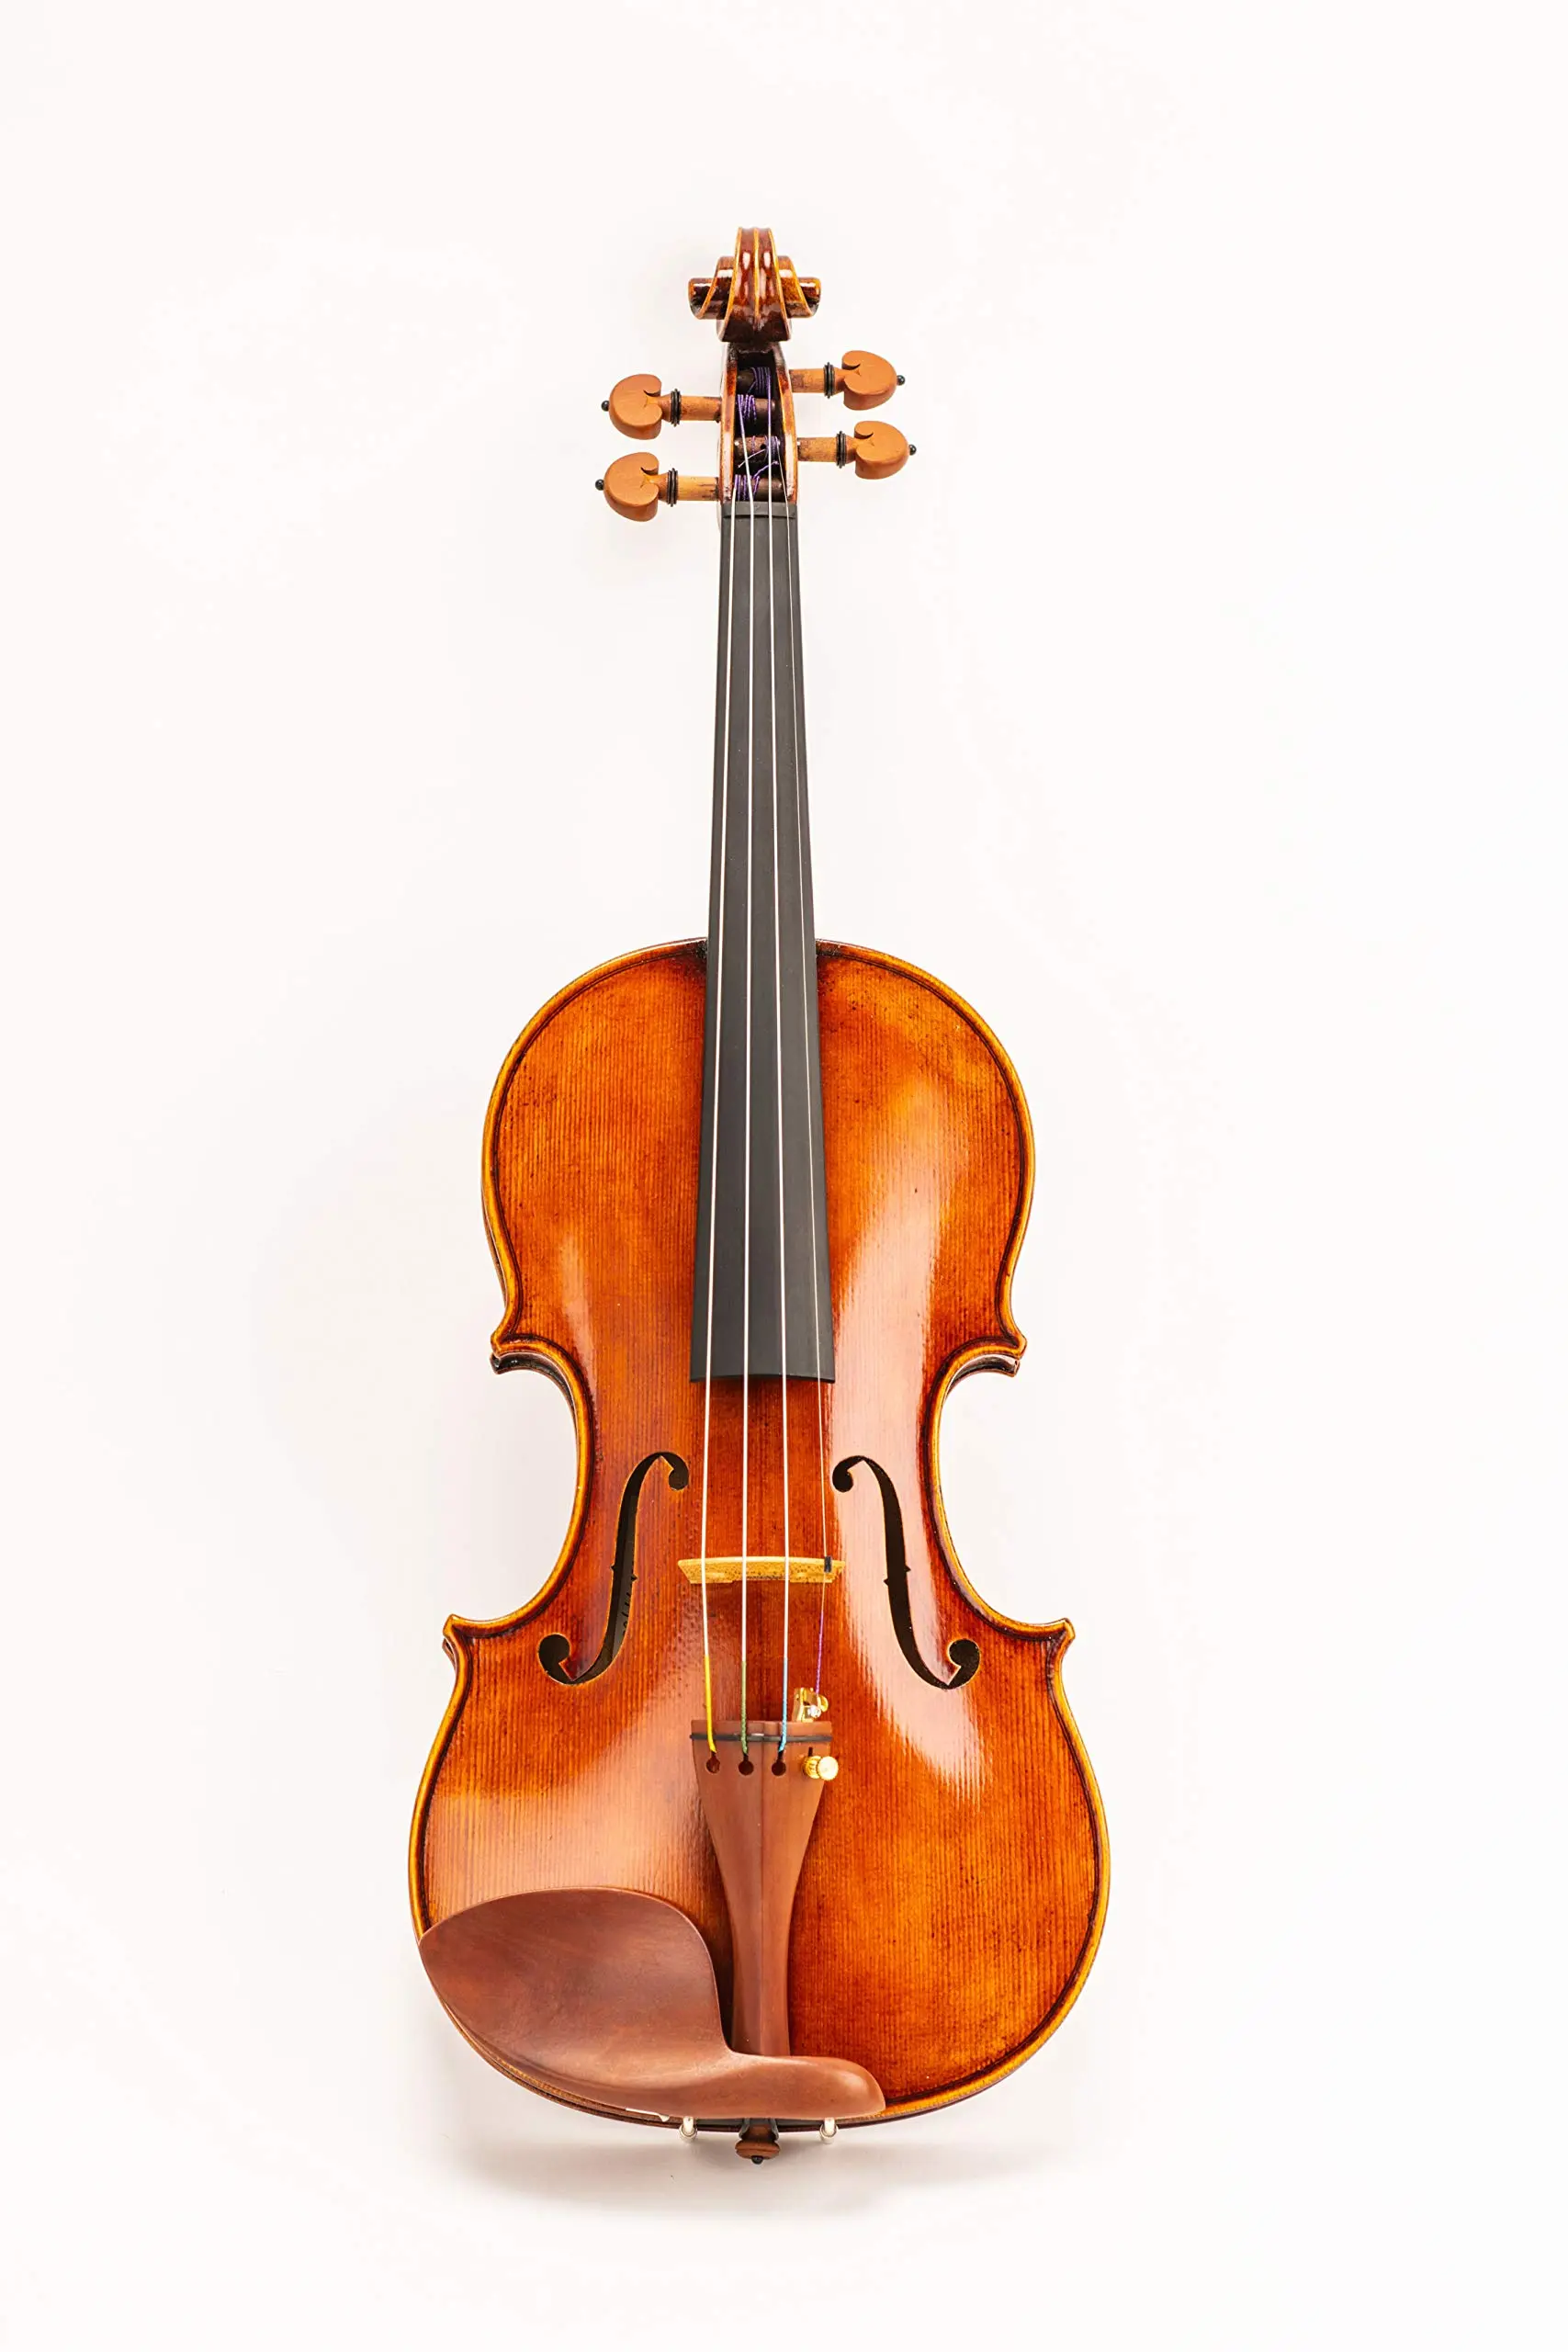 model violin - What is a Stradivarius model violin